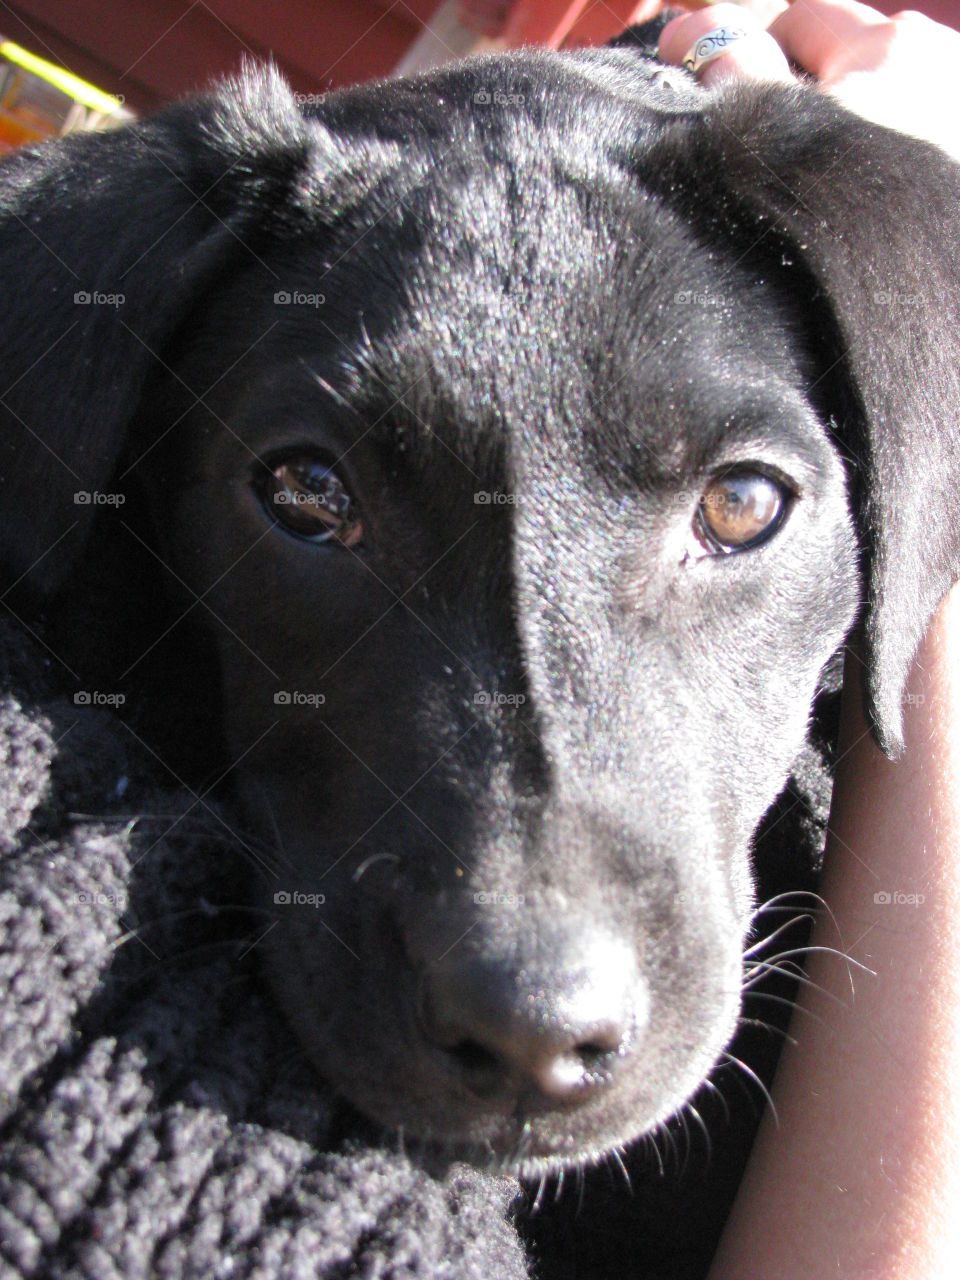 Portrait of a black dog